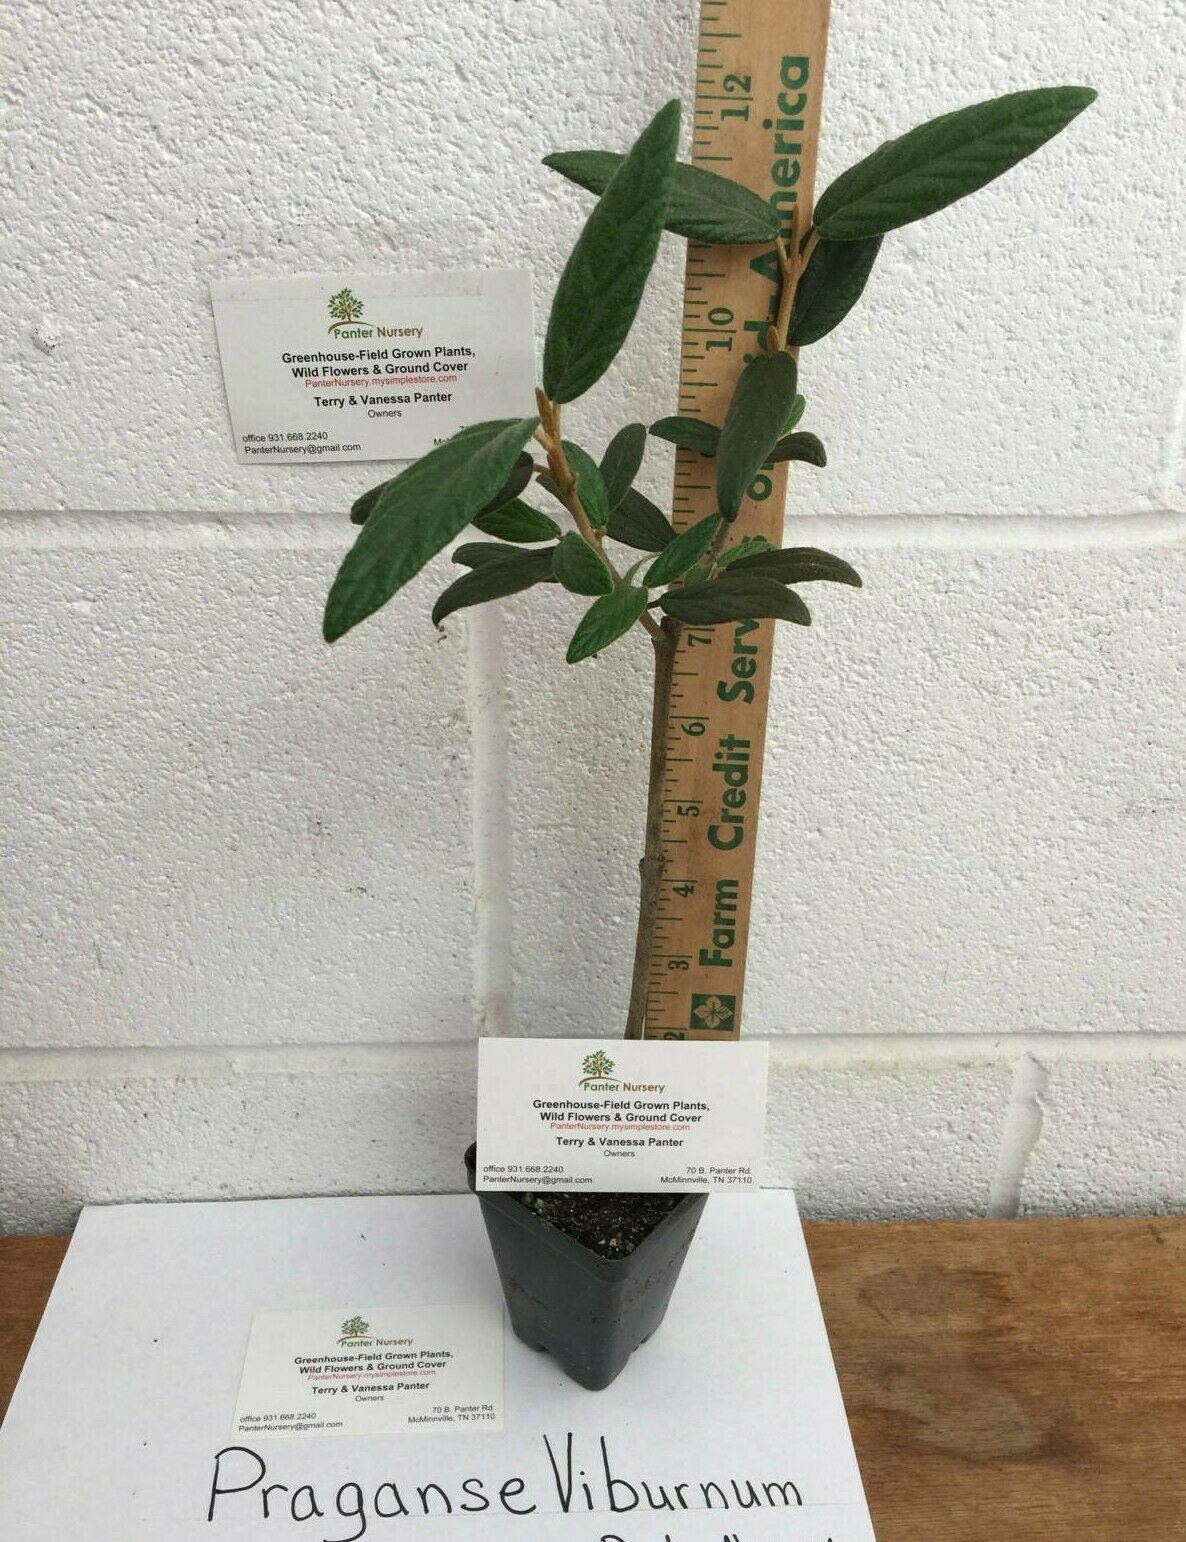 Pragense Viburnum - Semi-Evergreen Shrub - Live Plant - 6-12" Tall - 2.5" Pot - The Nursery Center